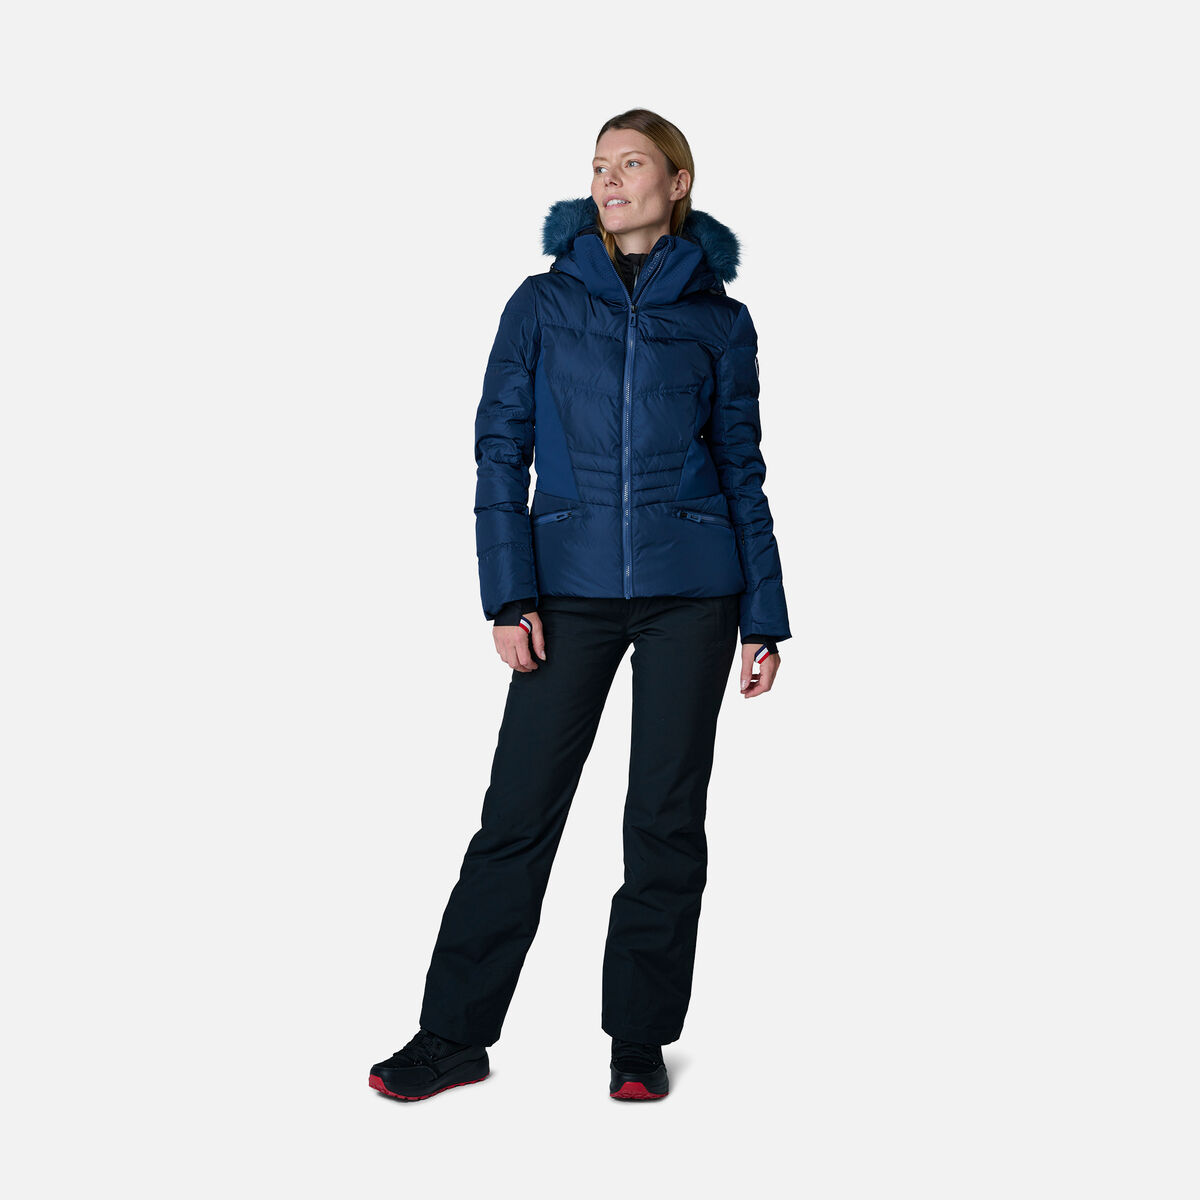 Rossignol Women's Ruby Merino Down Ski Jacket Blue